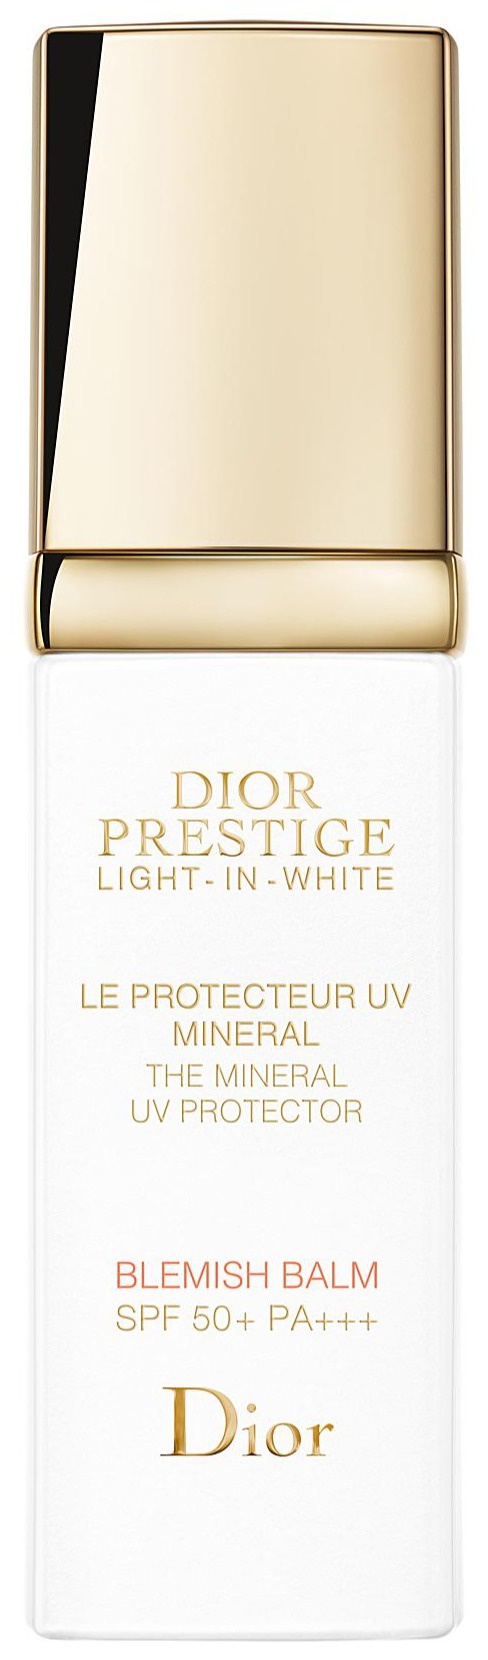 Dior Prestige Light-in-White Le Protecteur UV Minéral Blemish Balm SPF 50+ PA+++